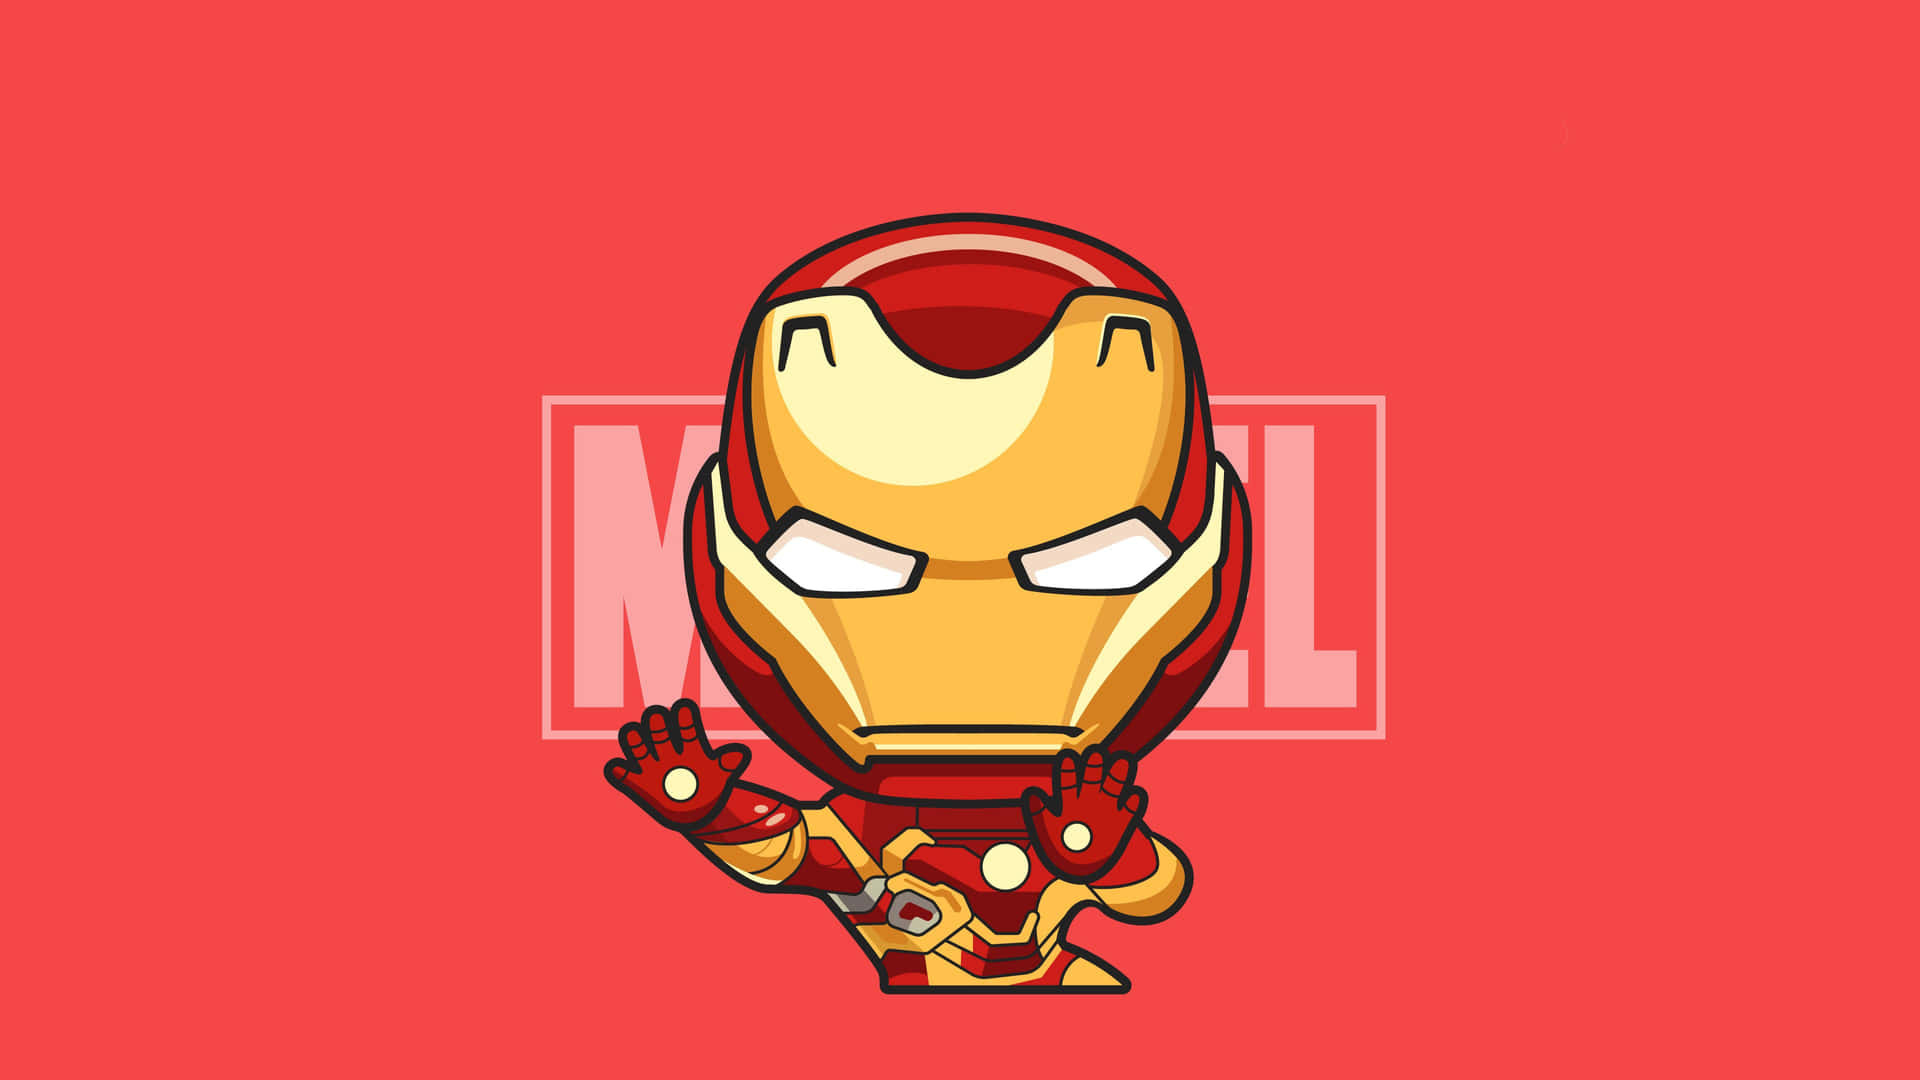 "The power of Iron Man" Wallpaper